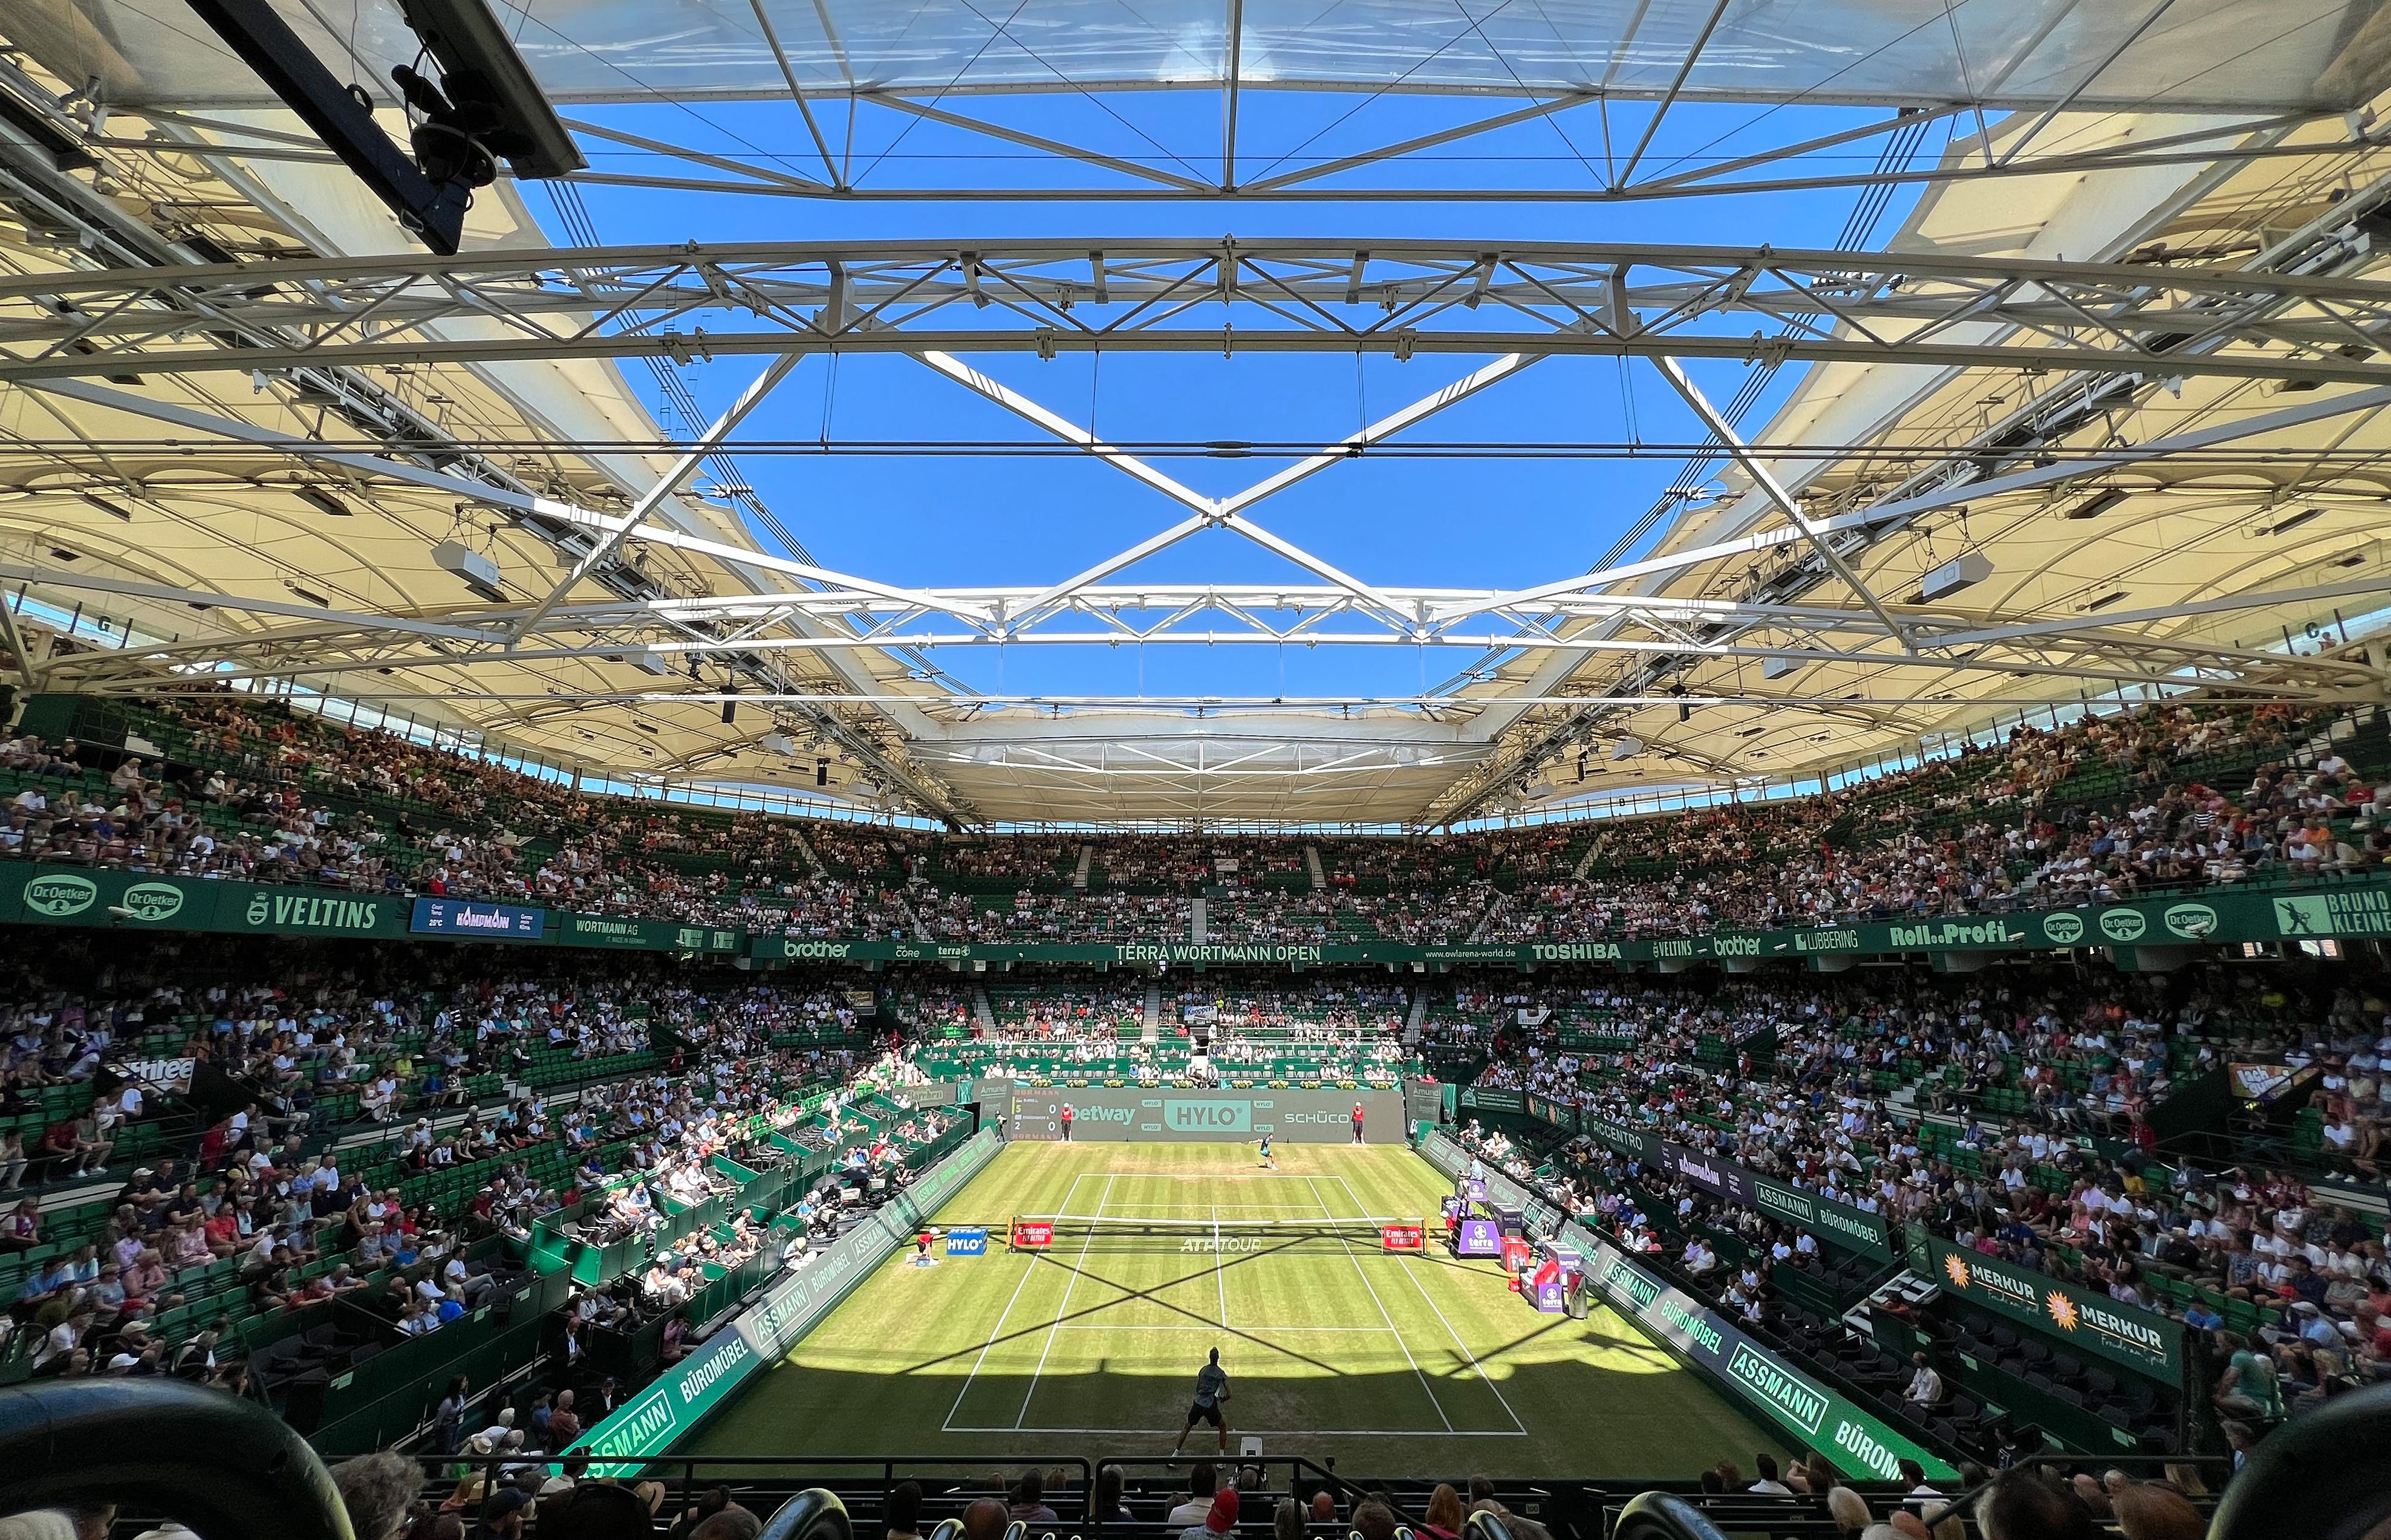 ATP chief Andrea Gaudenzi addresses likelihood of a future Masters 1000 grass event